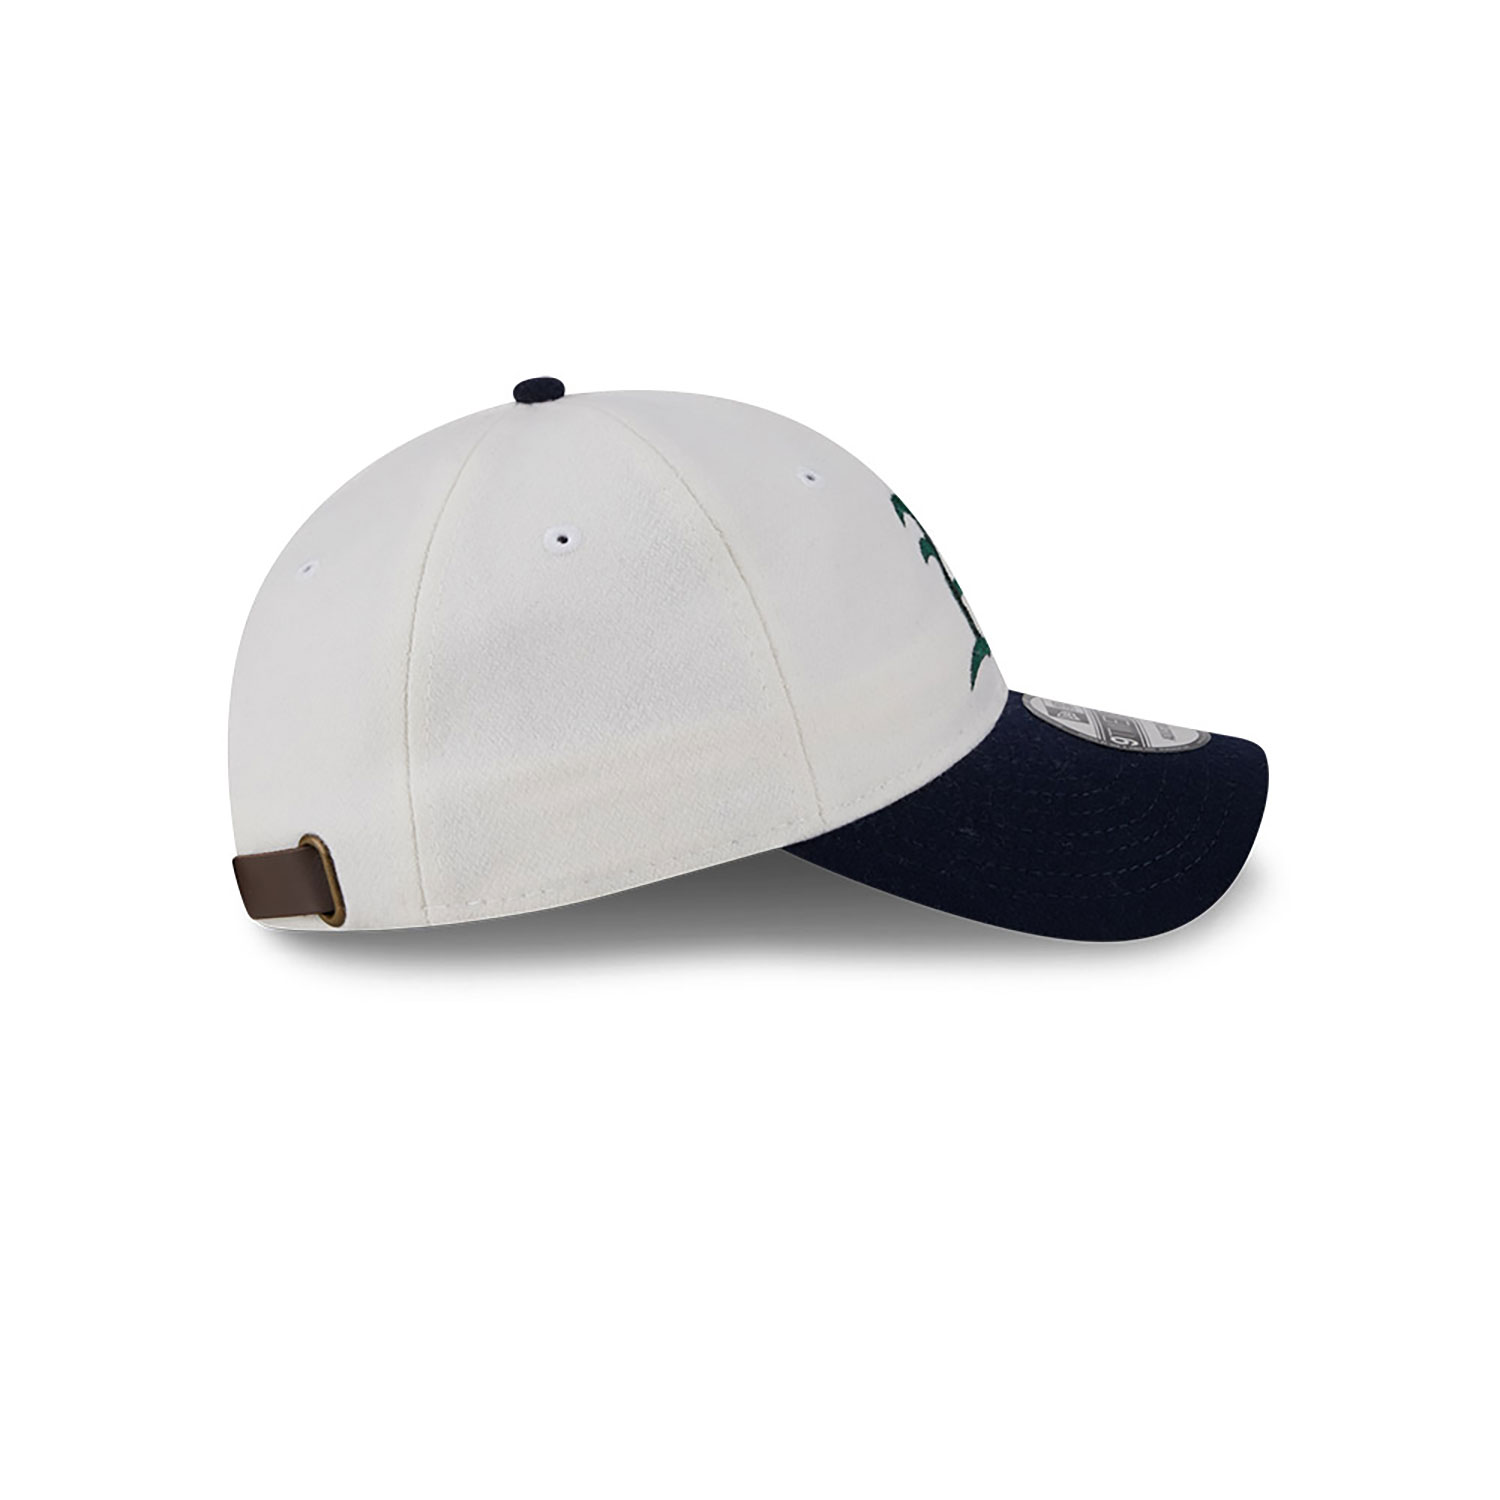 Oakland Athletics Leather Strap Chrome White 9TWENTY Adjustable Cap